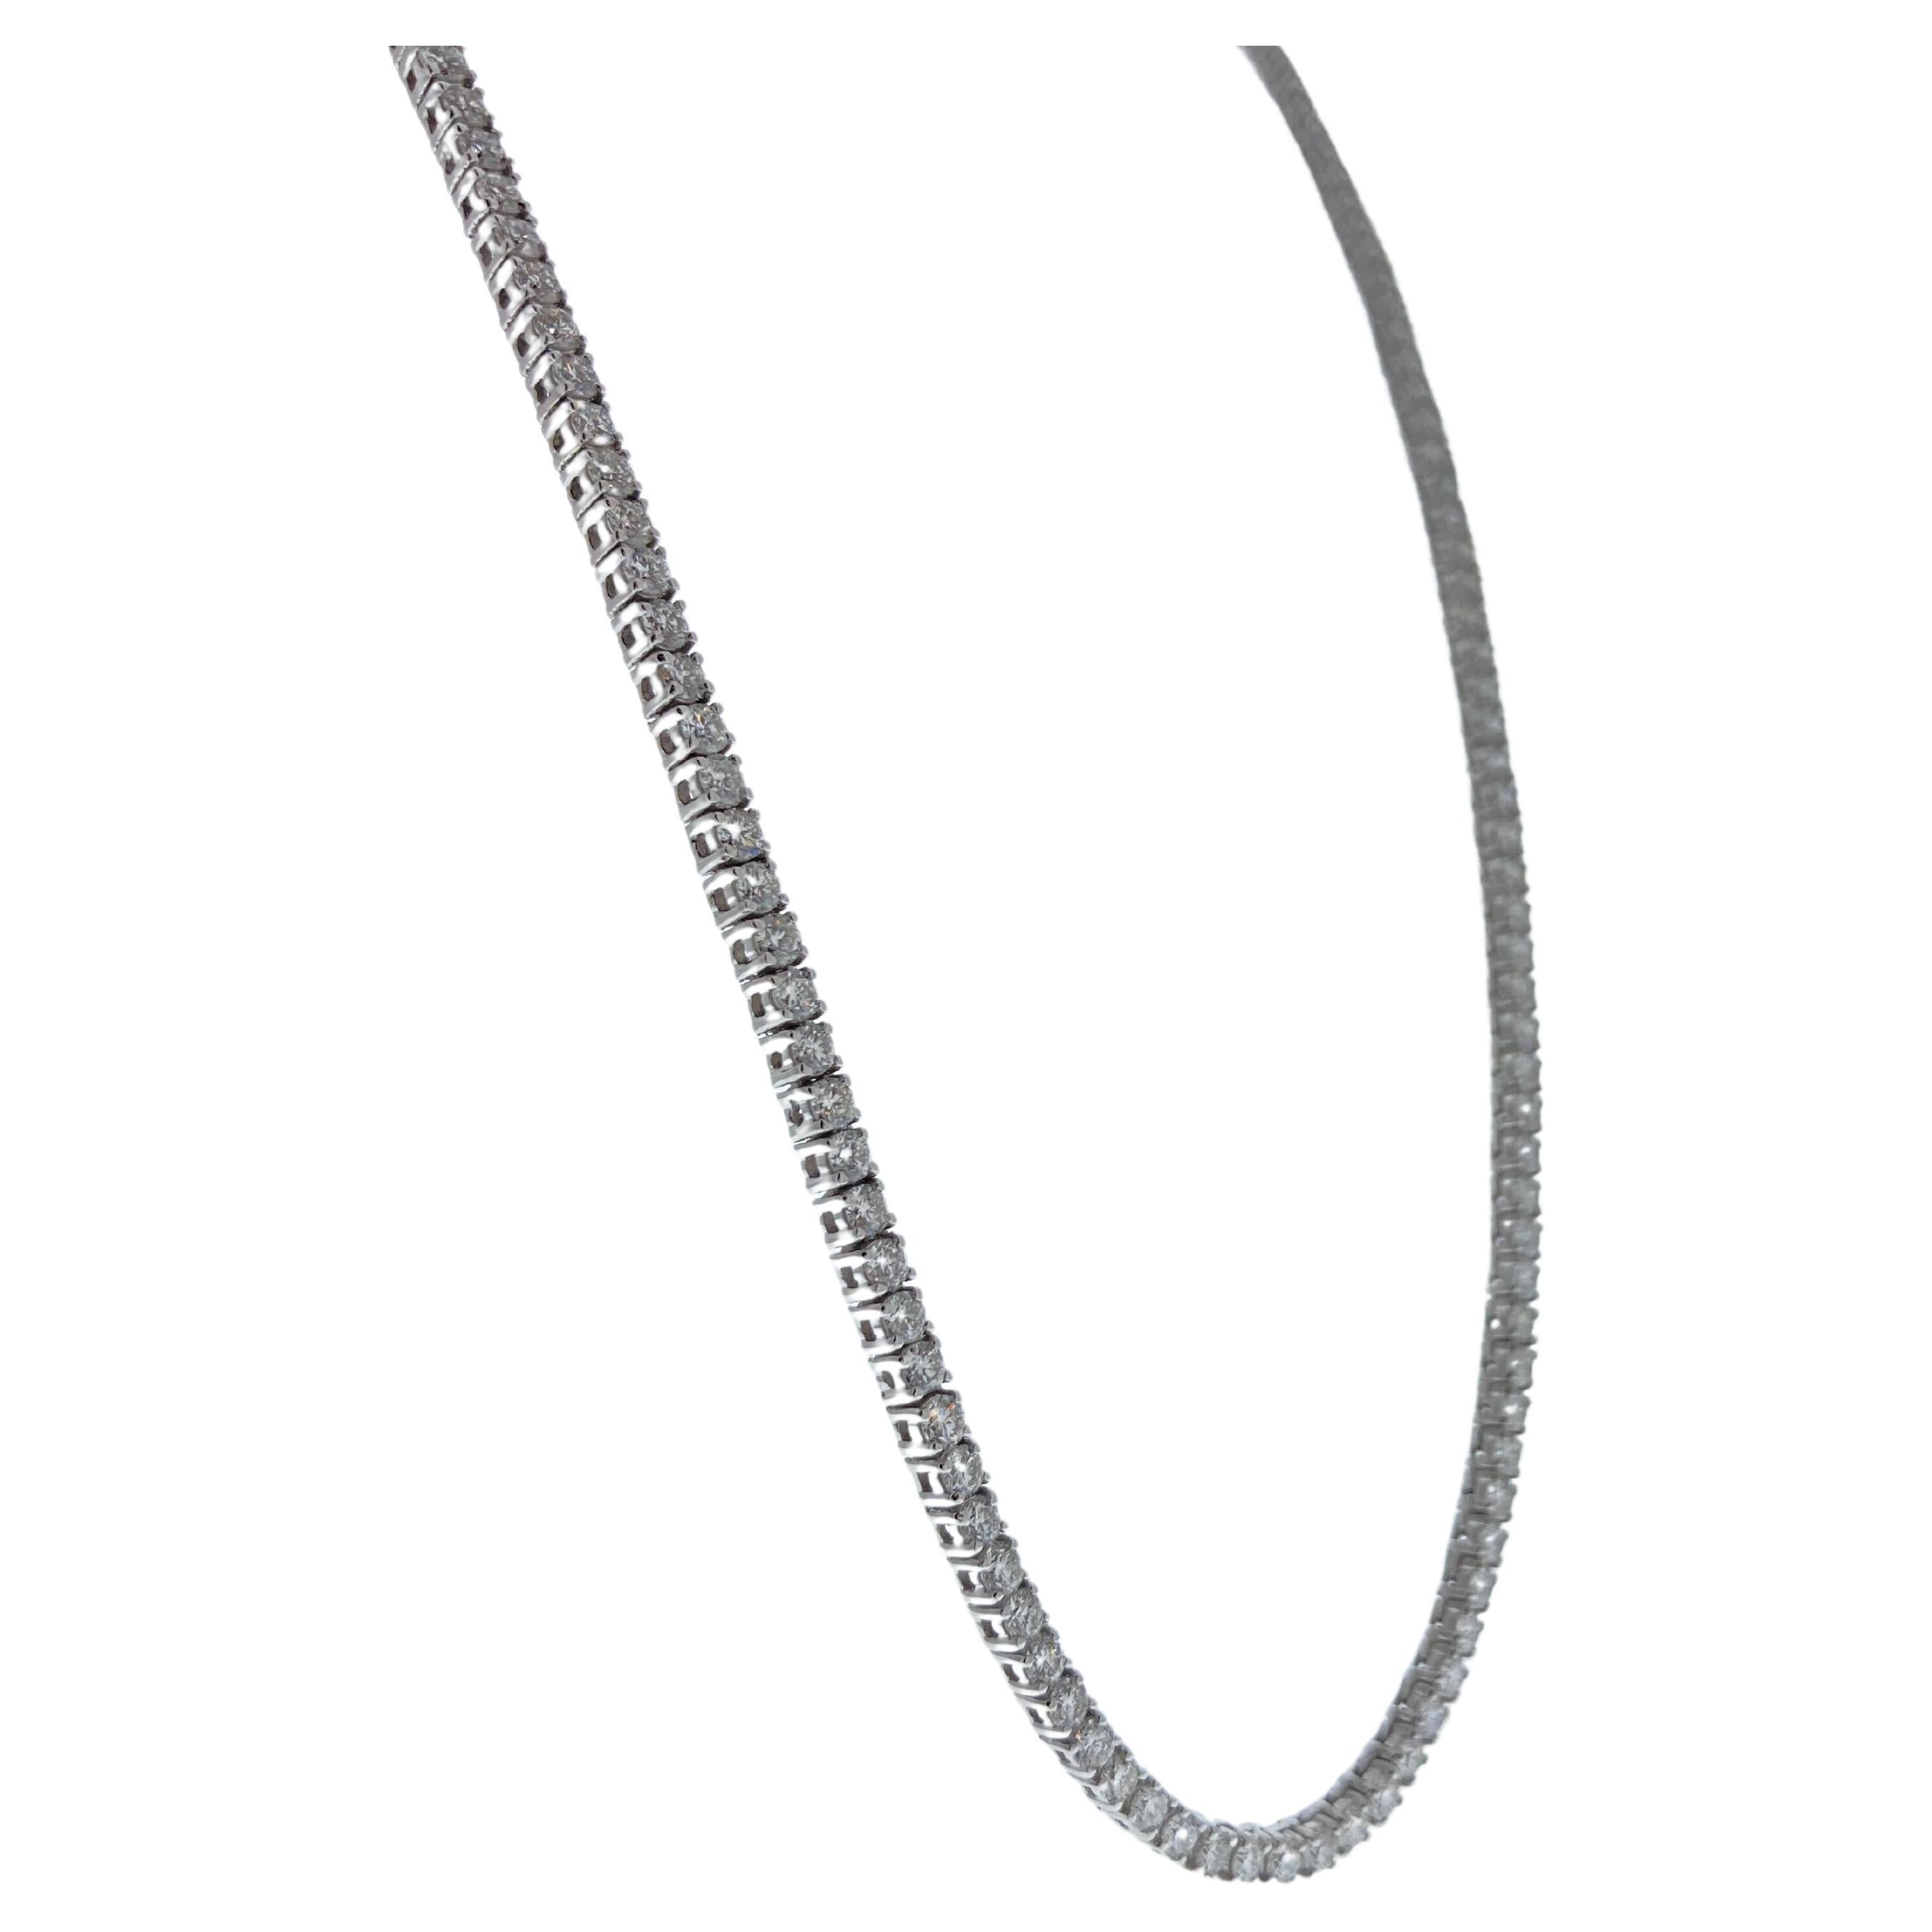 10.00 Carat Round Diamond Tennis Necklaces In 14k White Gold